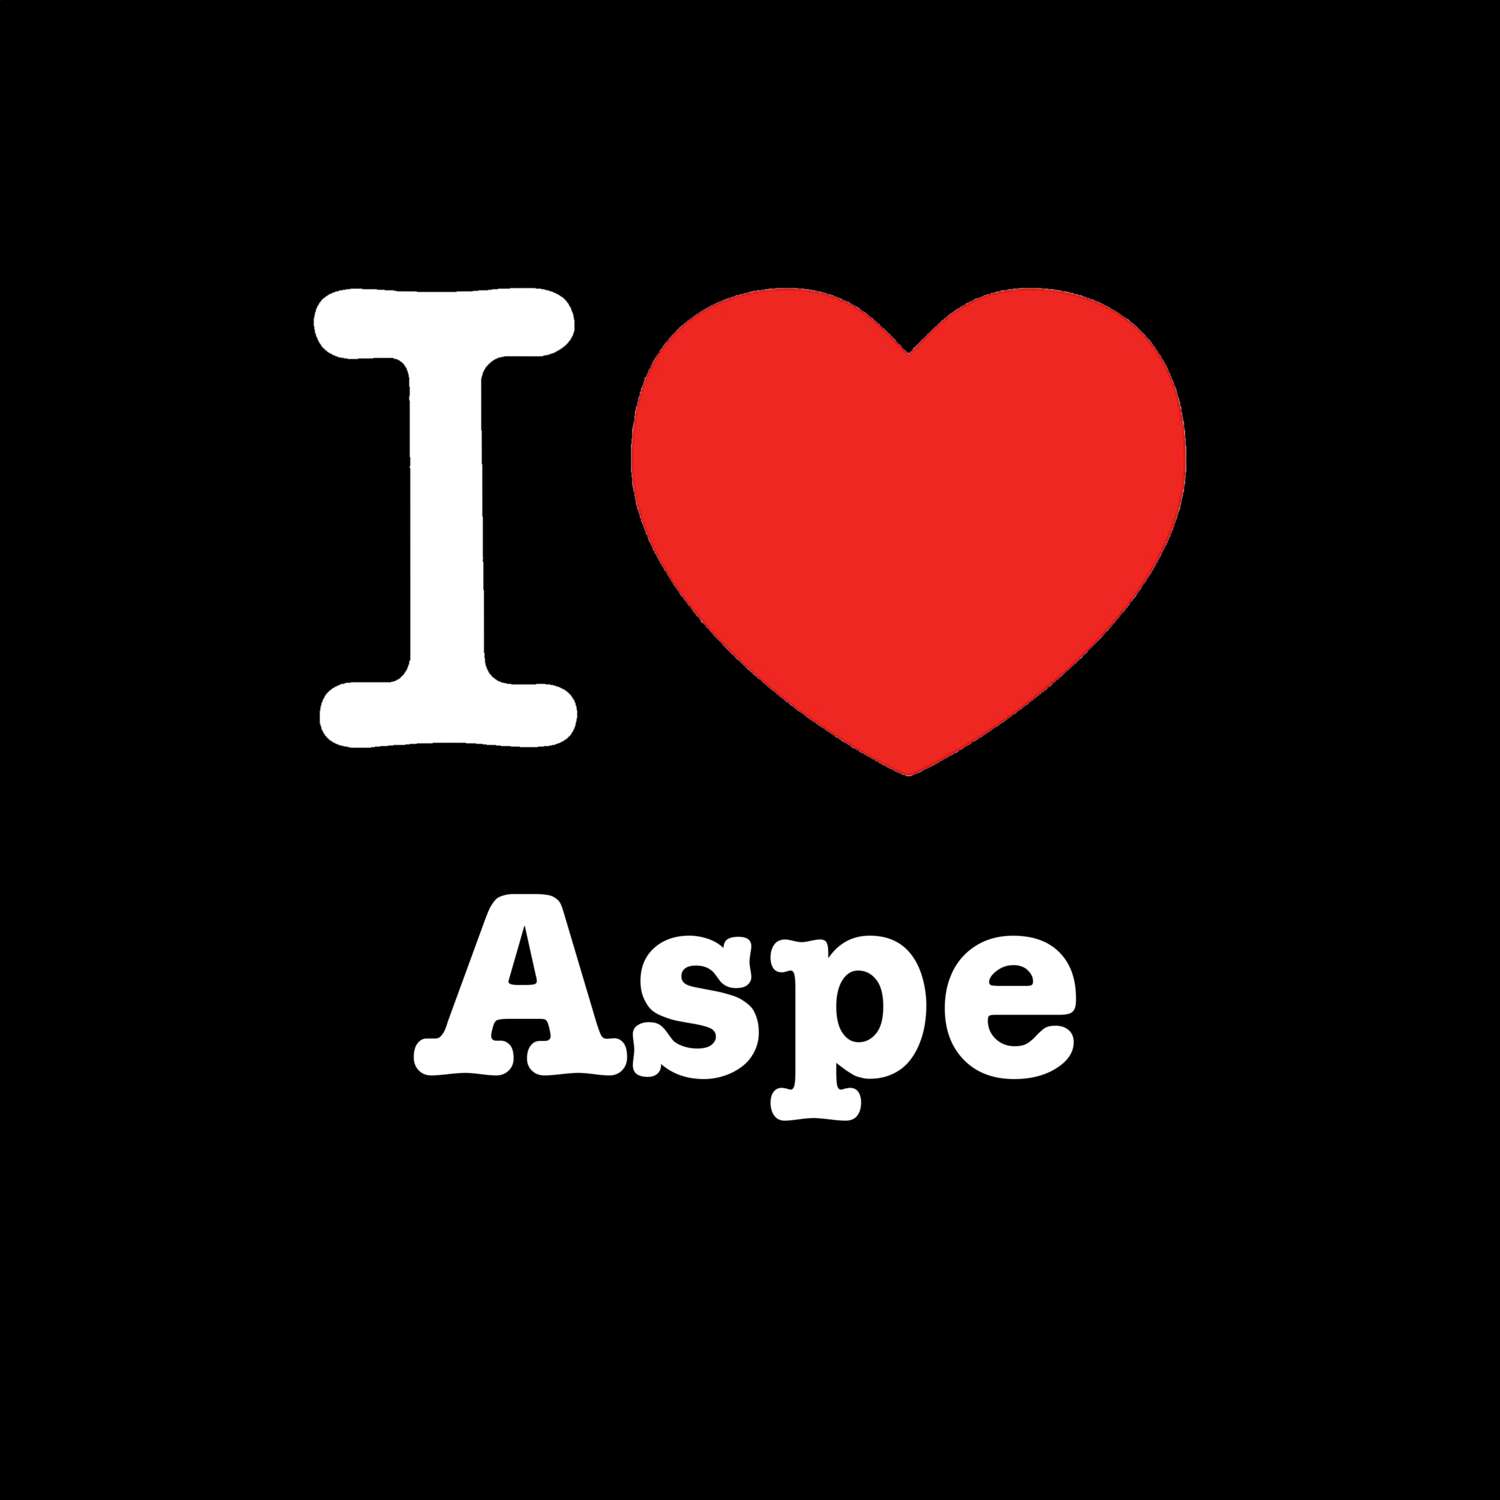 Aspe T-Shirt »I love«